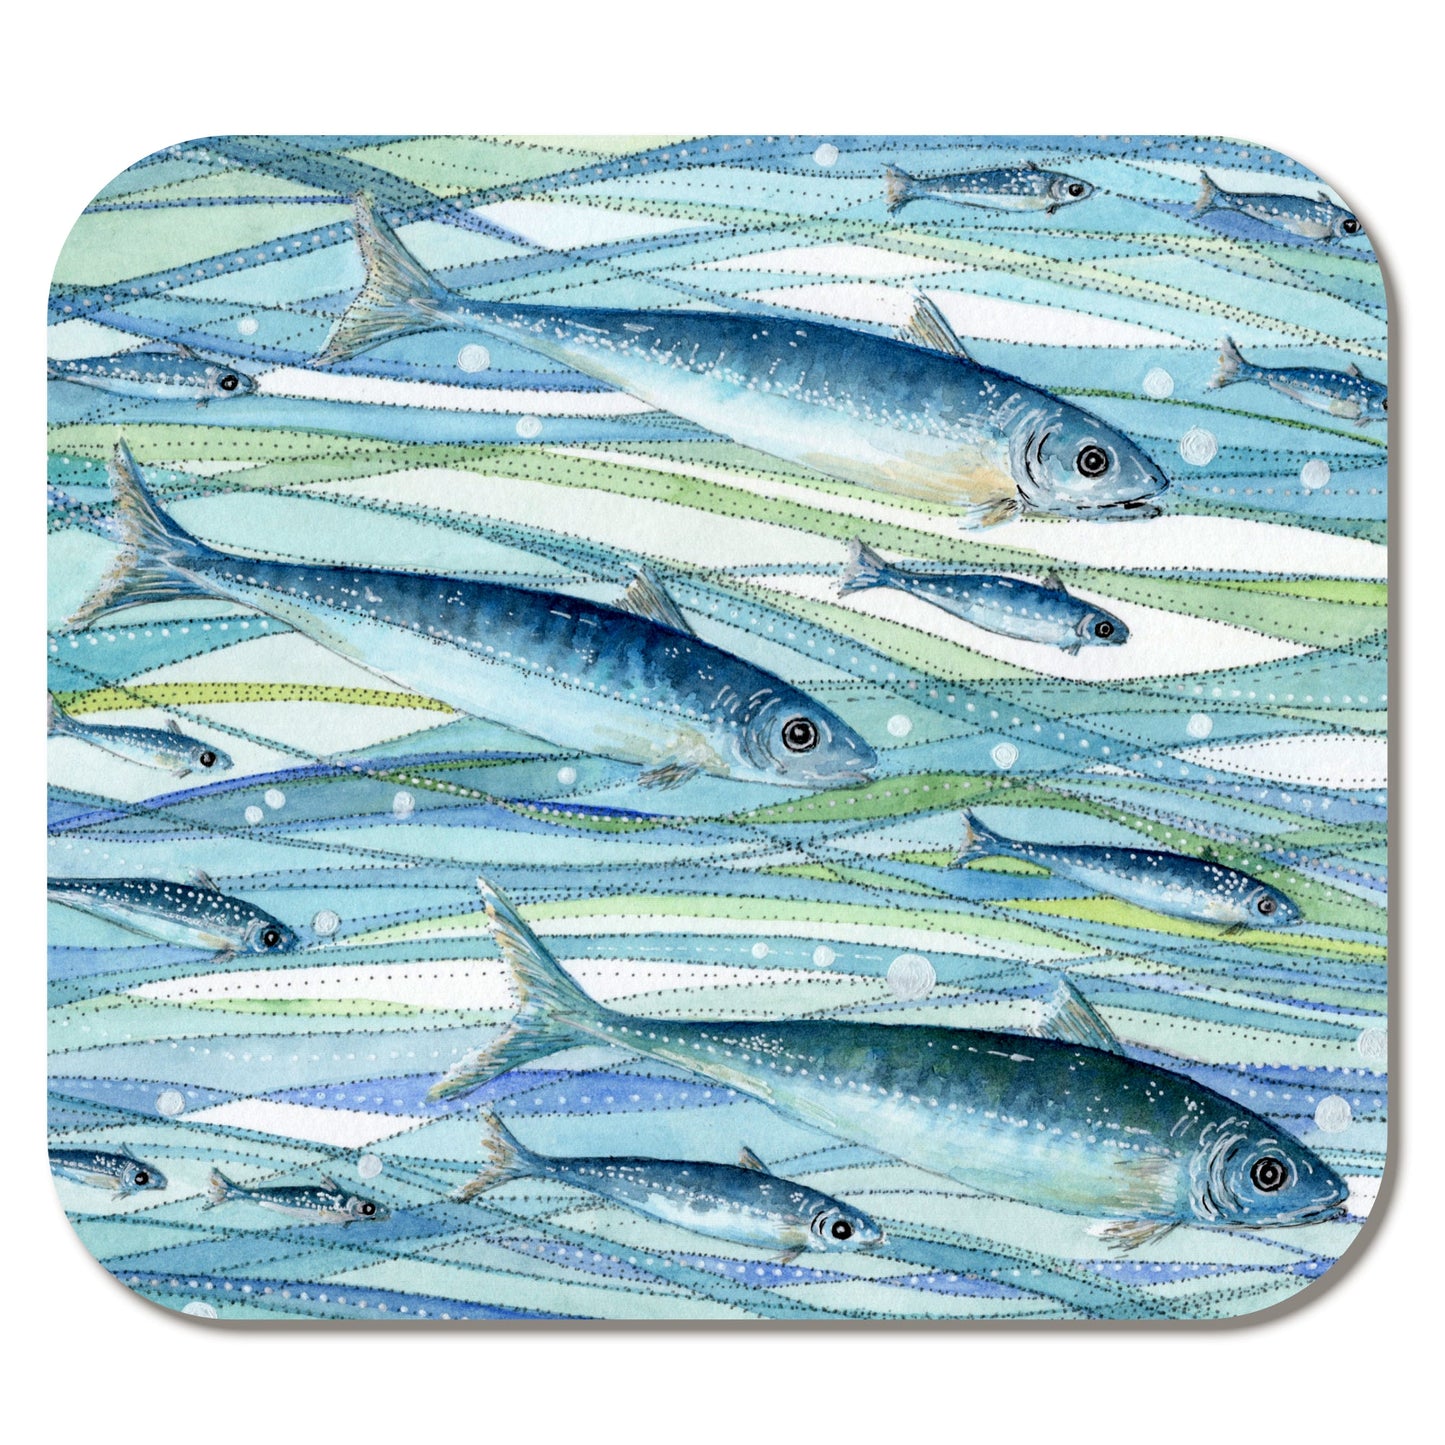 Coaster Set x 4 - Fish and Octopus - Coastal Watercolour Art - East Neuk Beach Crafts